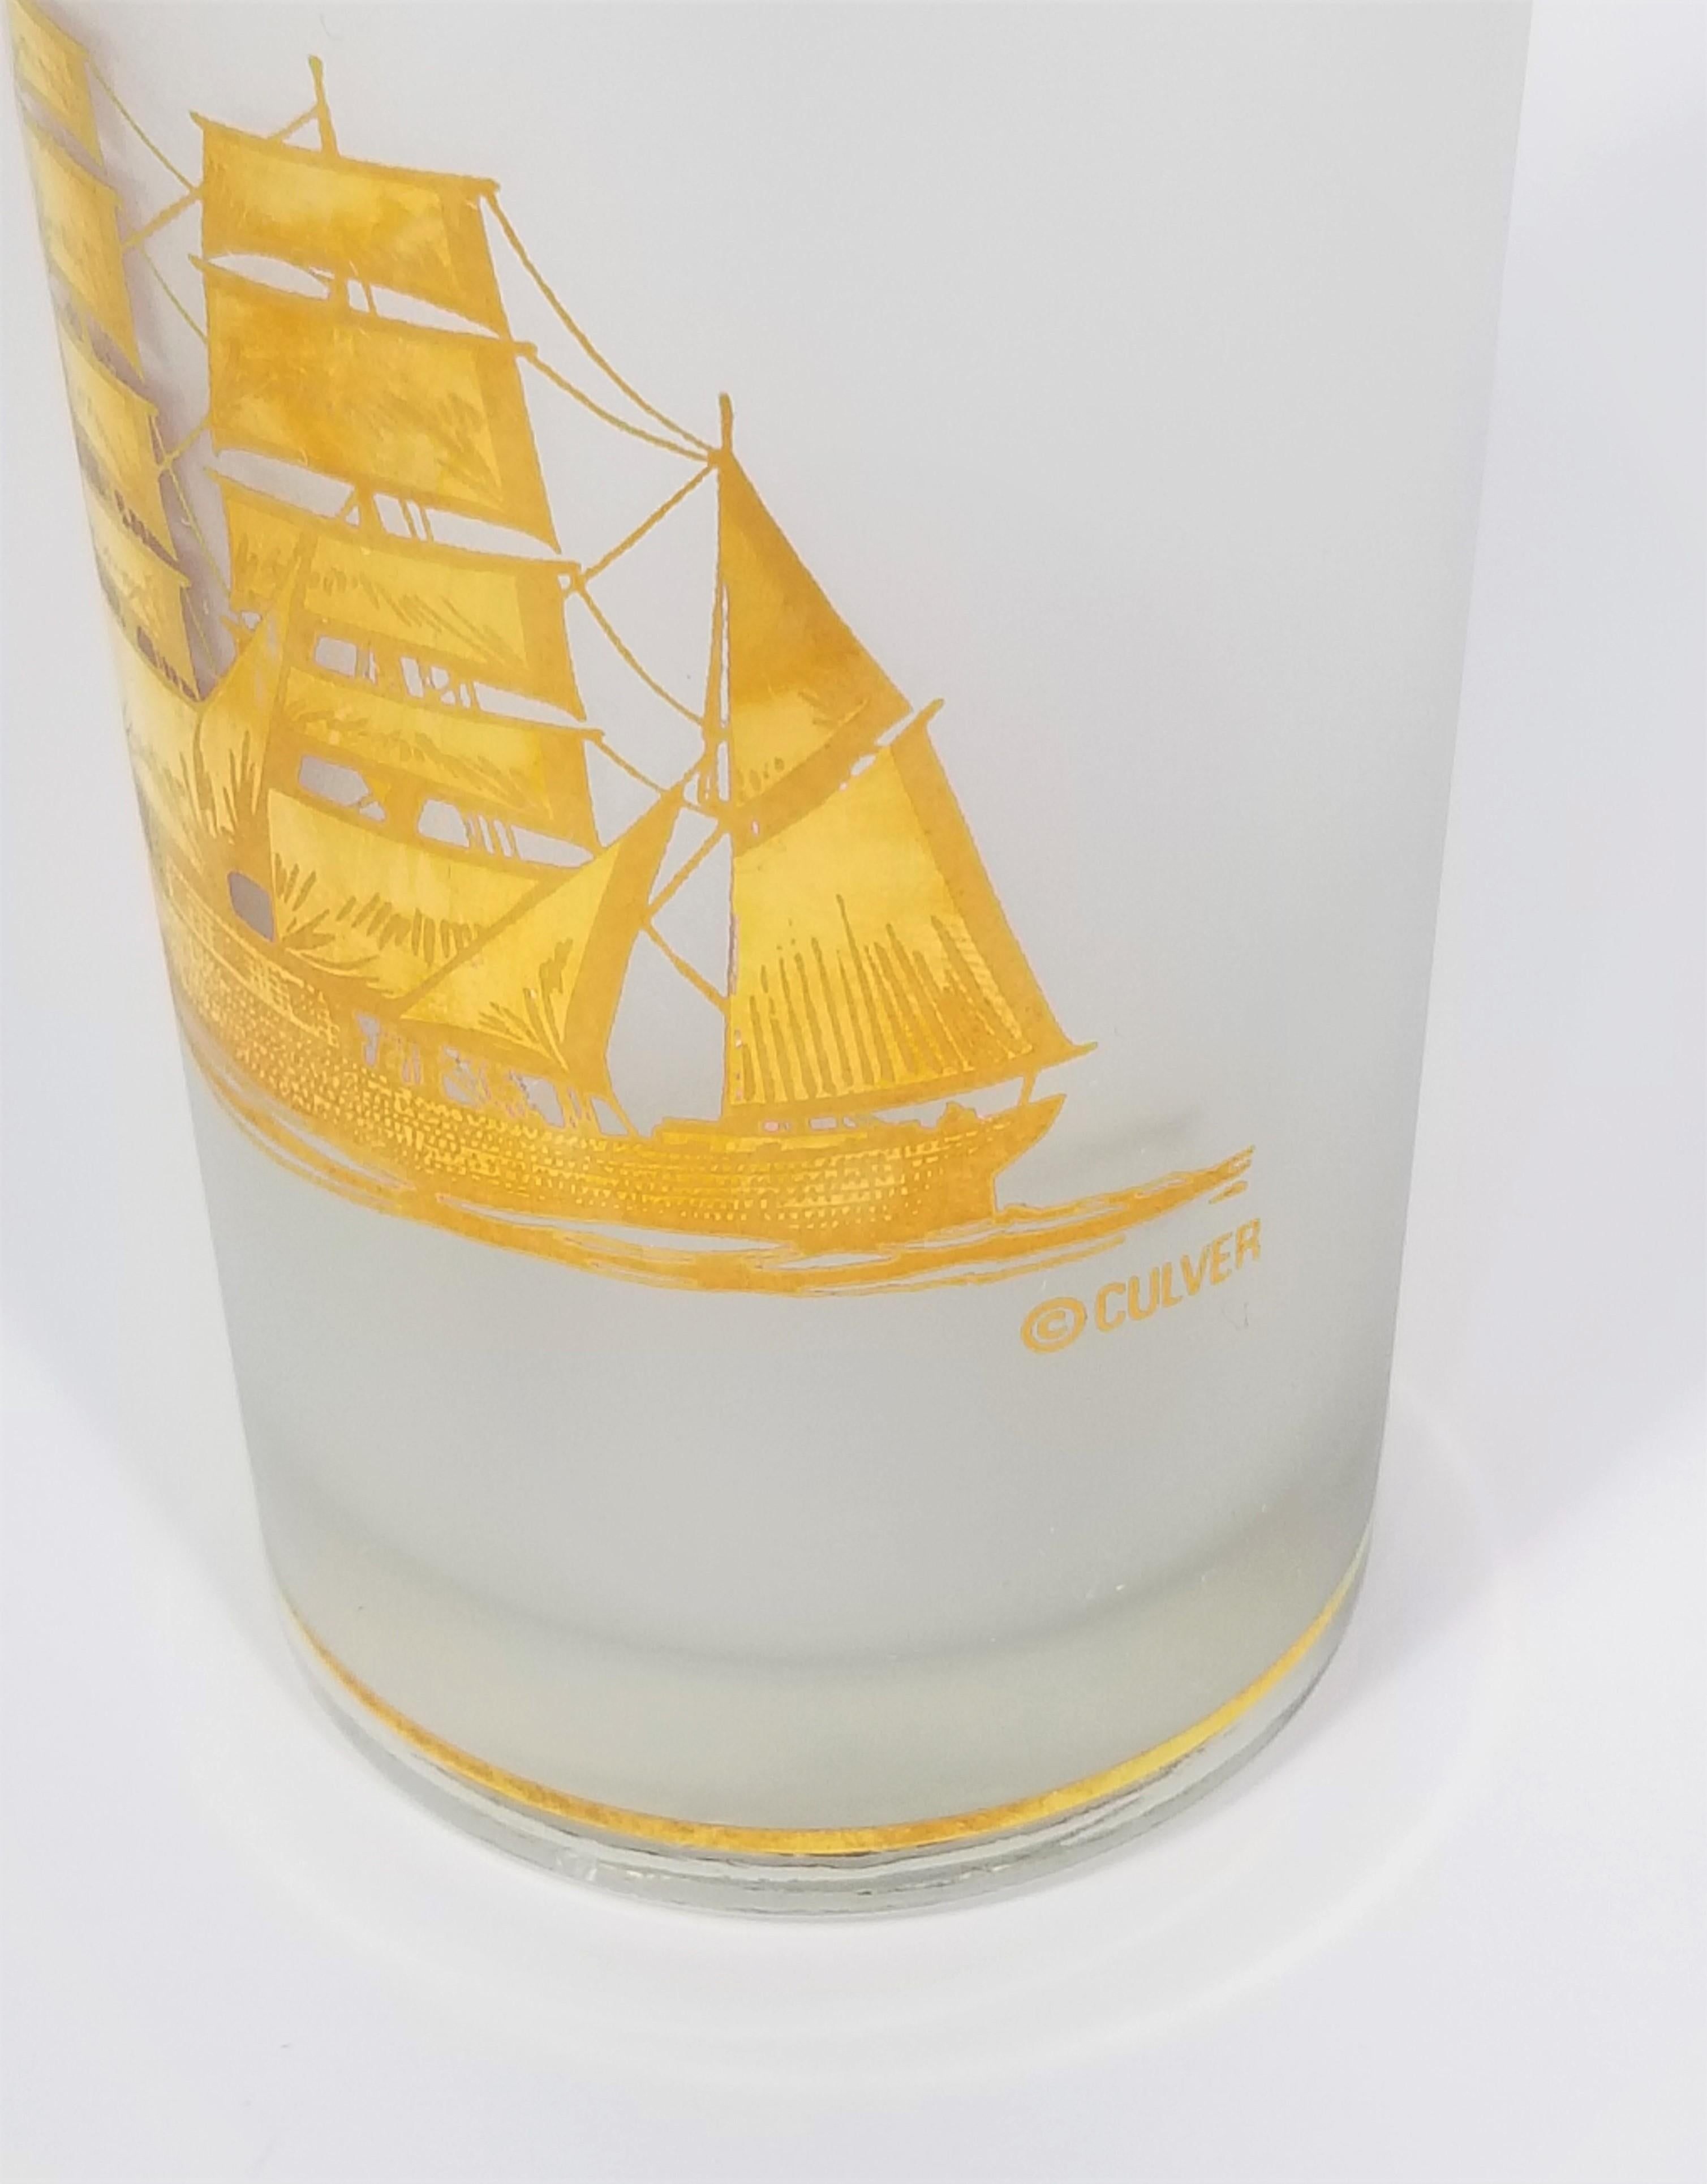 Culver 22k Gold Schooner Ship Glassware Barware  For Sale 6